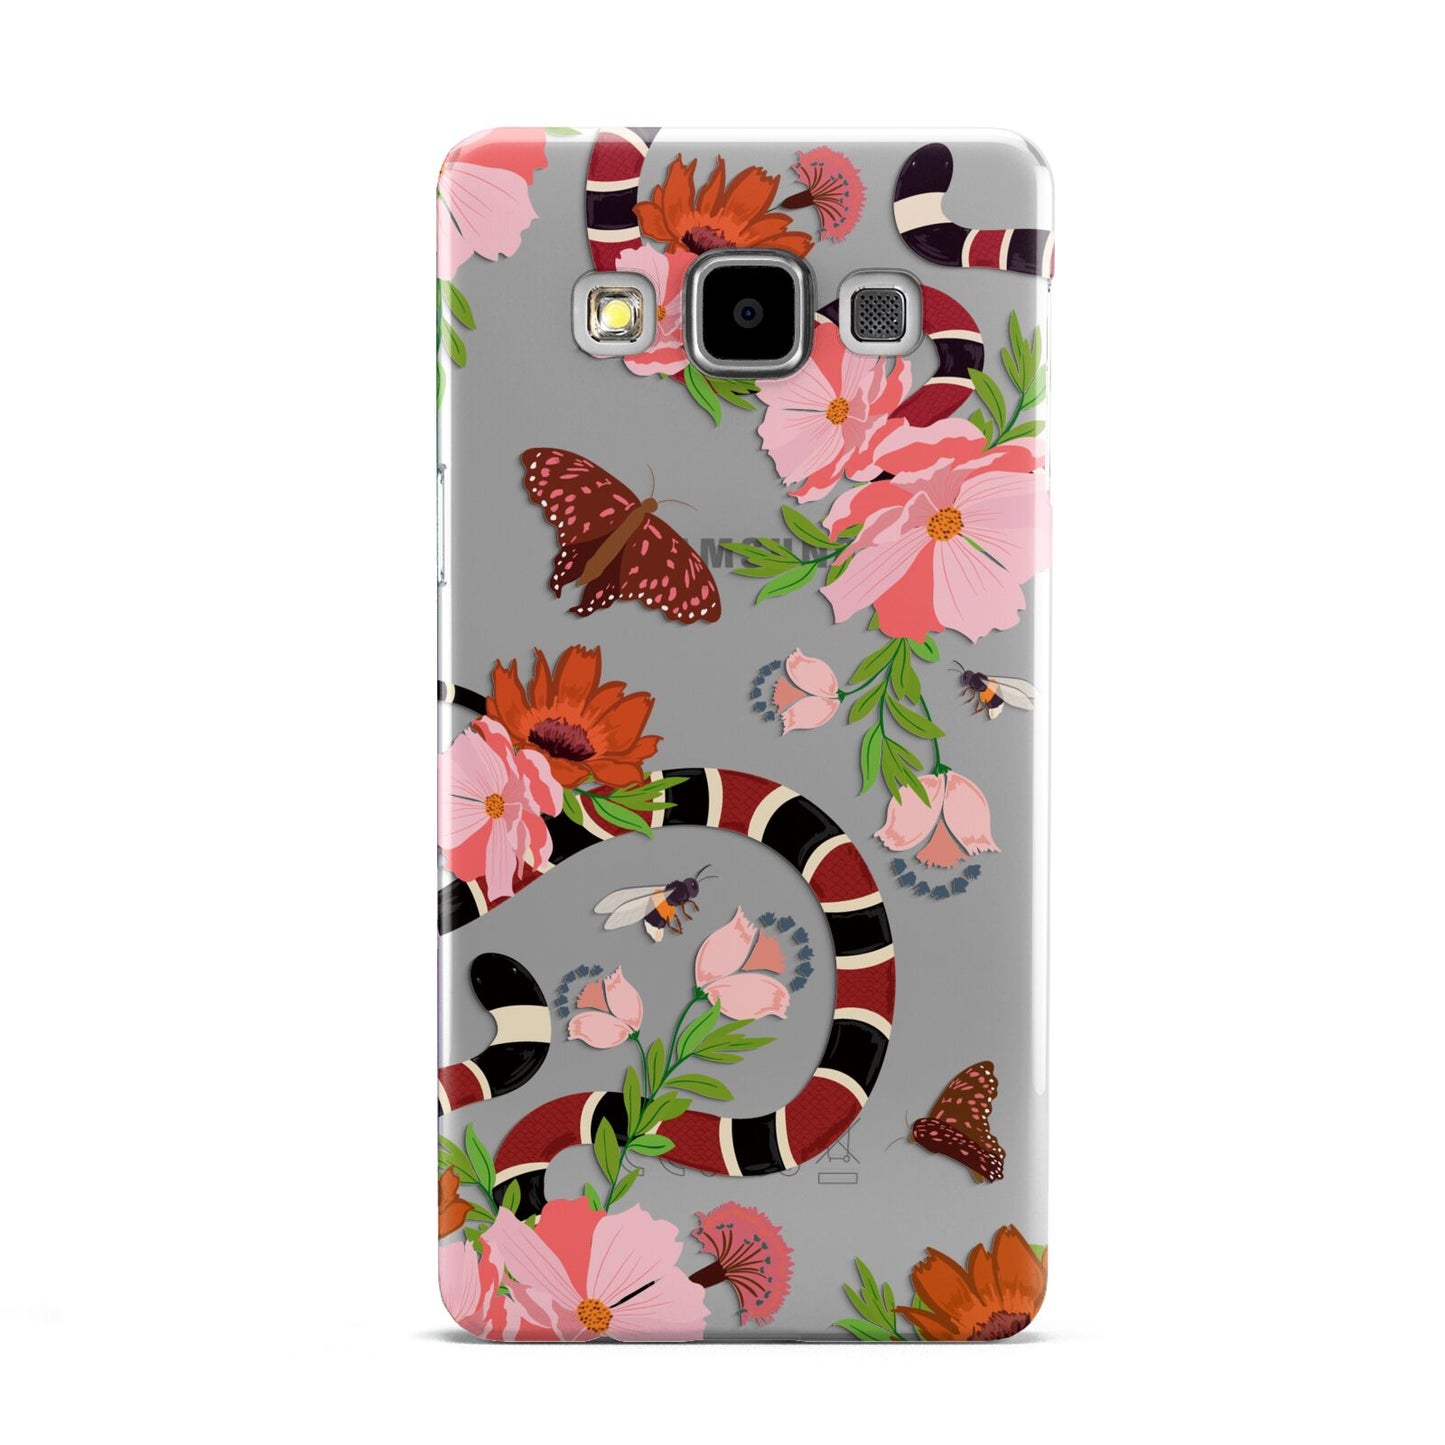 Floral Snake Samsung Galaxy A5 Case